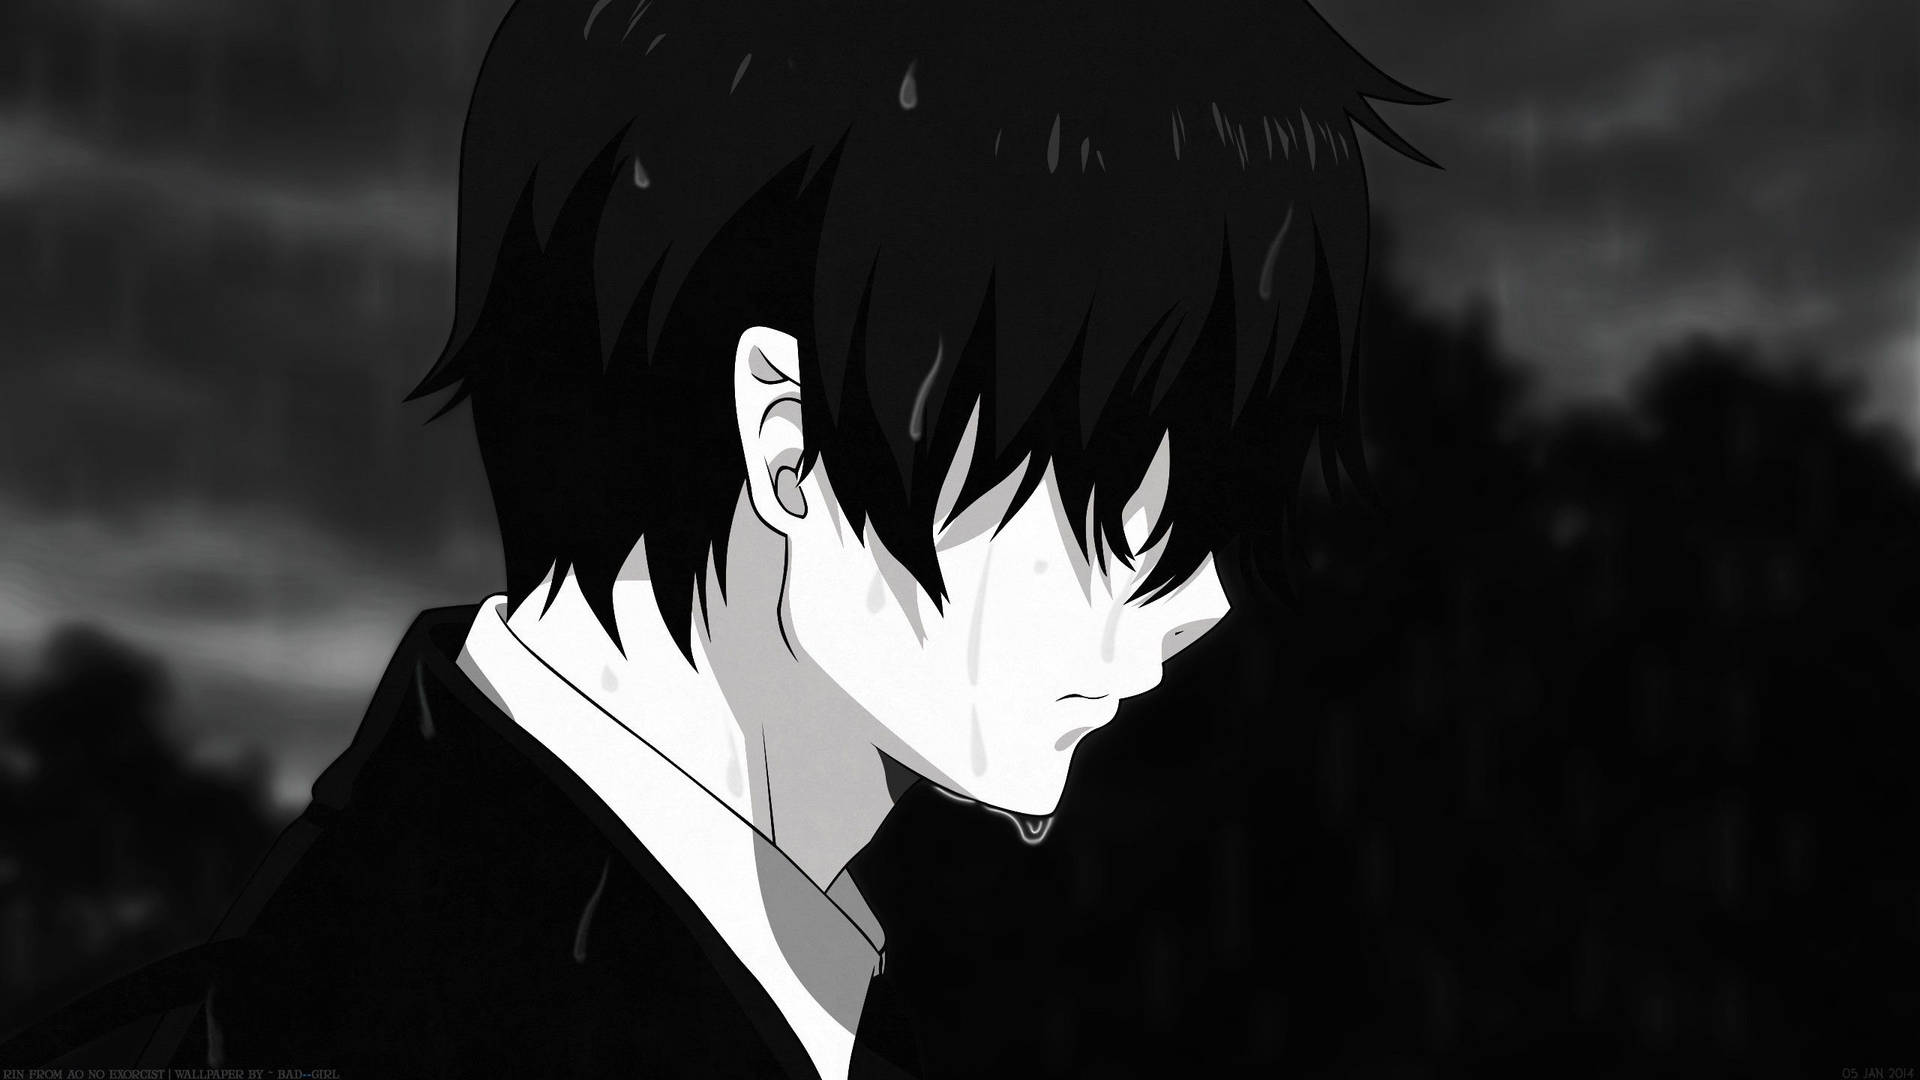 Aesthetic Anime Desktop Crying Boy Black And White Background